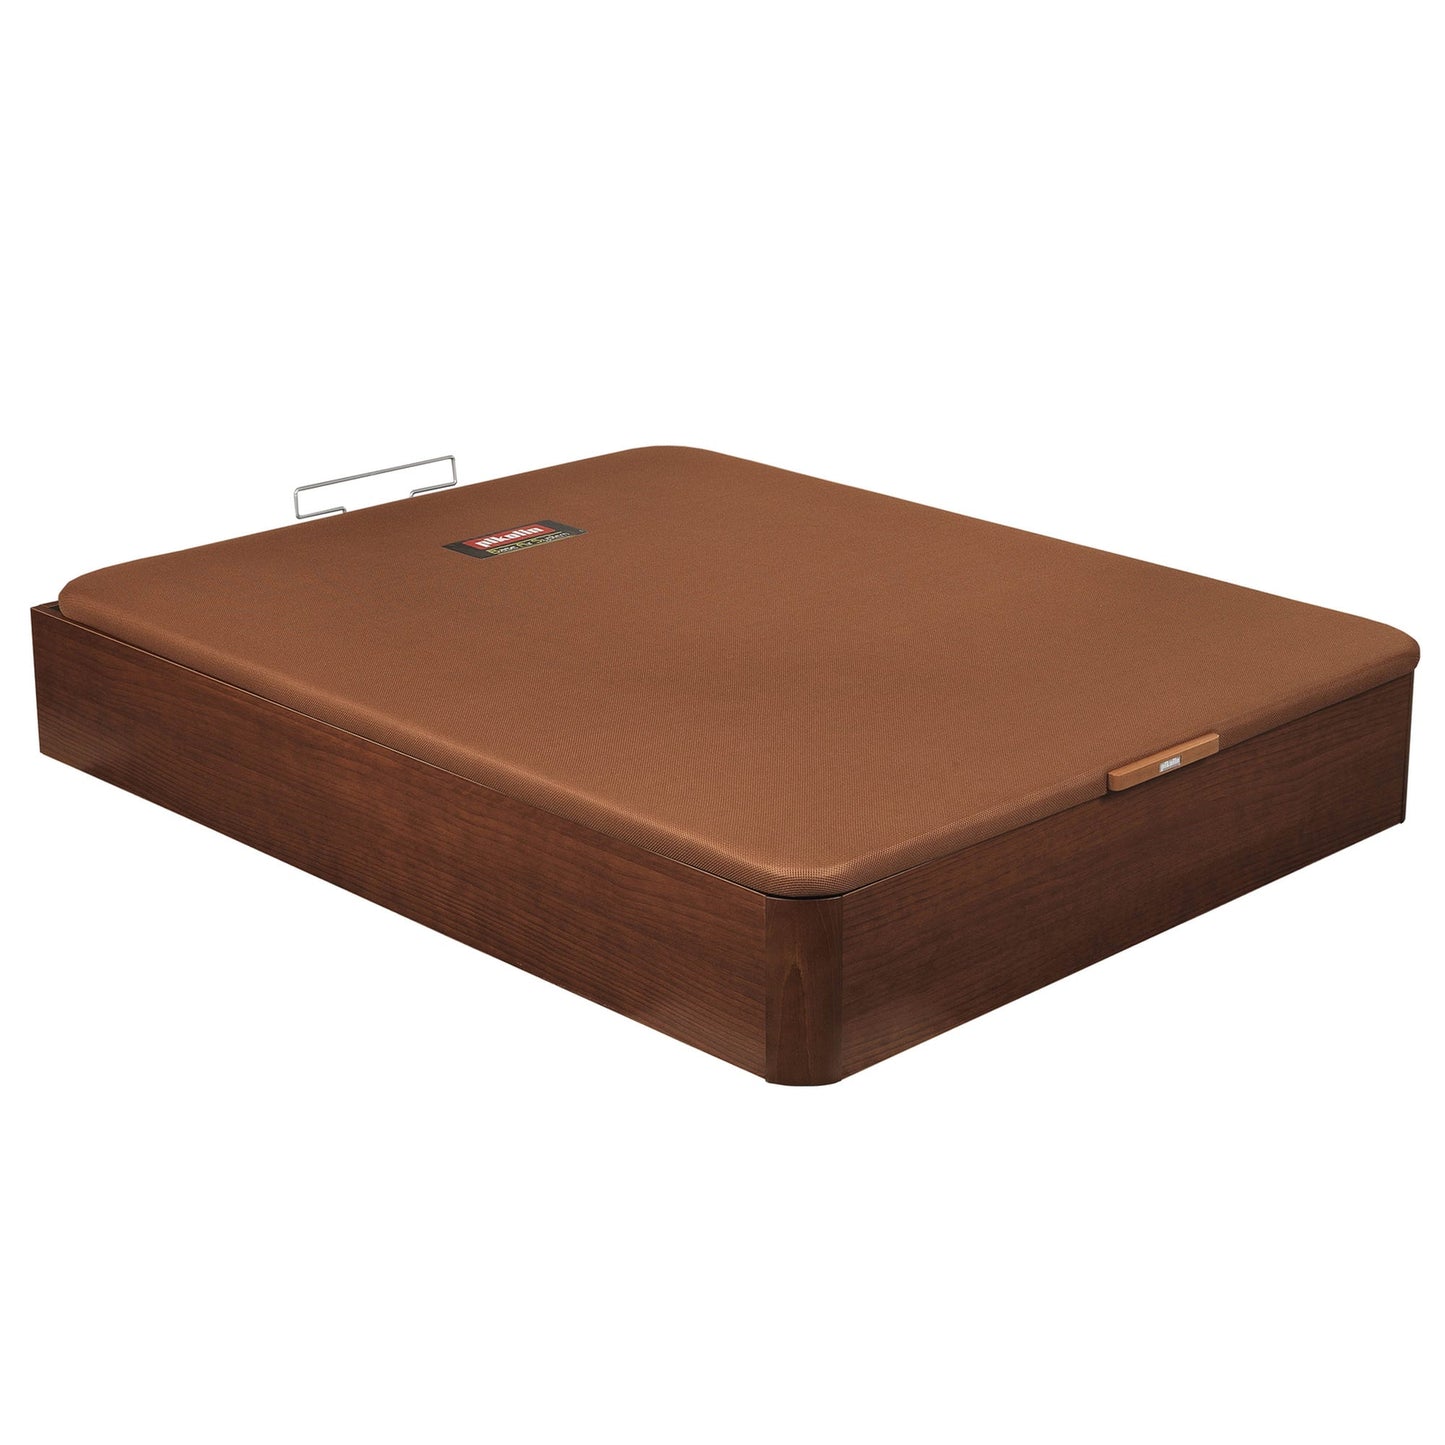 Canapé abatible de madera de color cerezo - NATURBOX CEREZO - 105x190